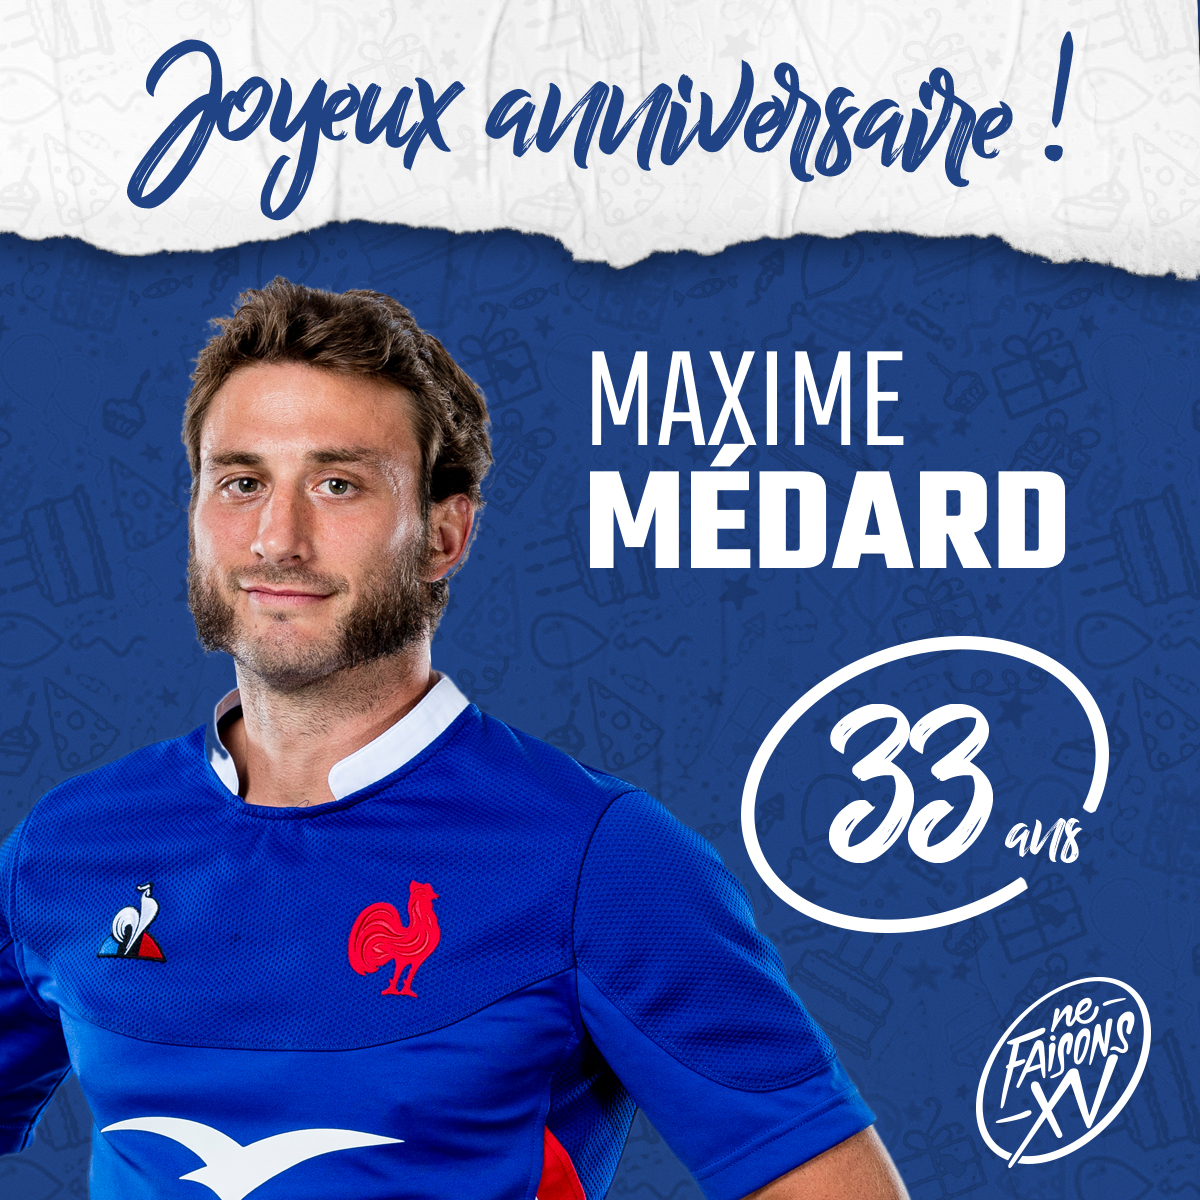 France Rugby En Twitter 𝙈𝙖𝙭𝙞𝙢𝙚 Ou 𝙒𝙤𝙡𝙫𝙚𝙧𝙞𝙣𝙚 Joyeux Anniversaire A Notre Super Heros Prefere Maxmedard Nefaisonsxv Xvdefrance T Co Bf1of3kq5b